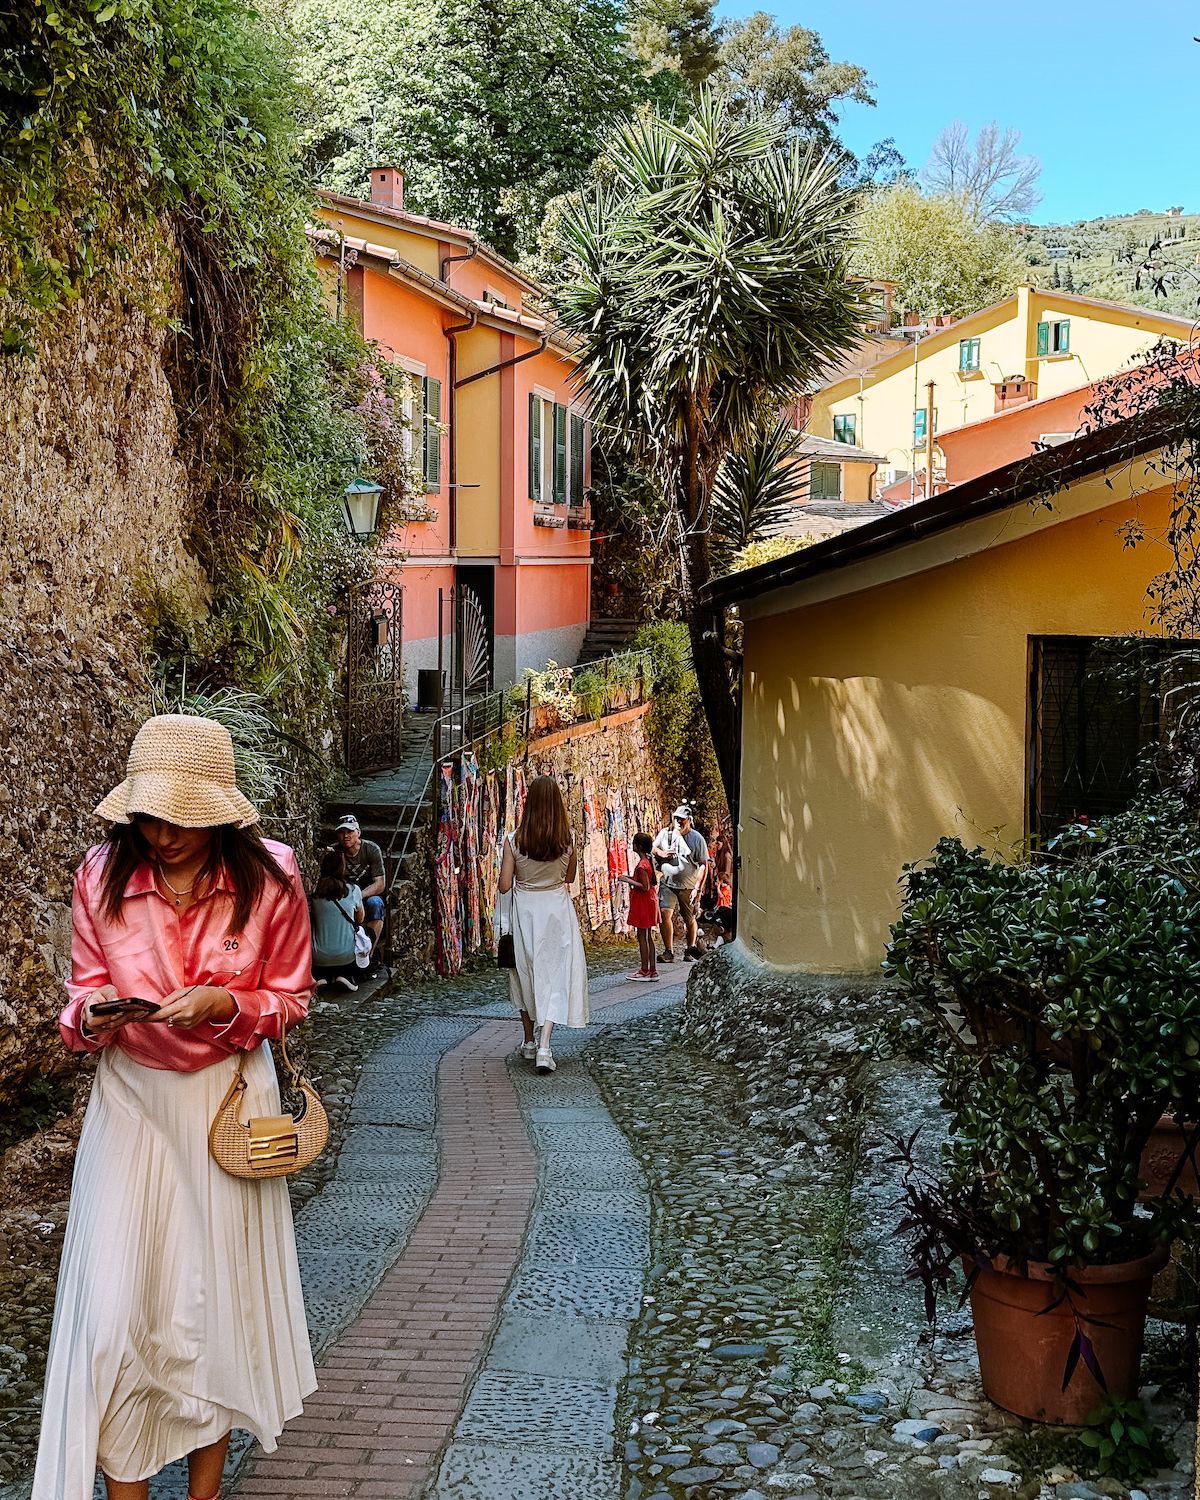 Two girls in dresses walking down a quiet cobblestone pathway in Portofino